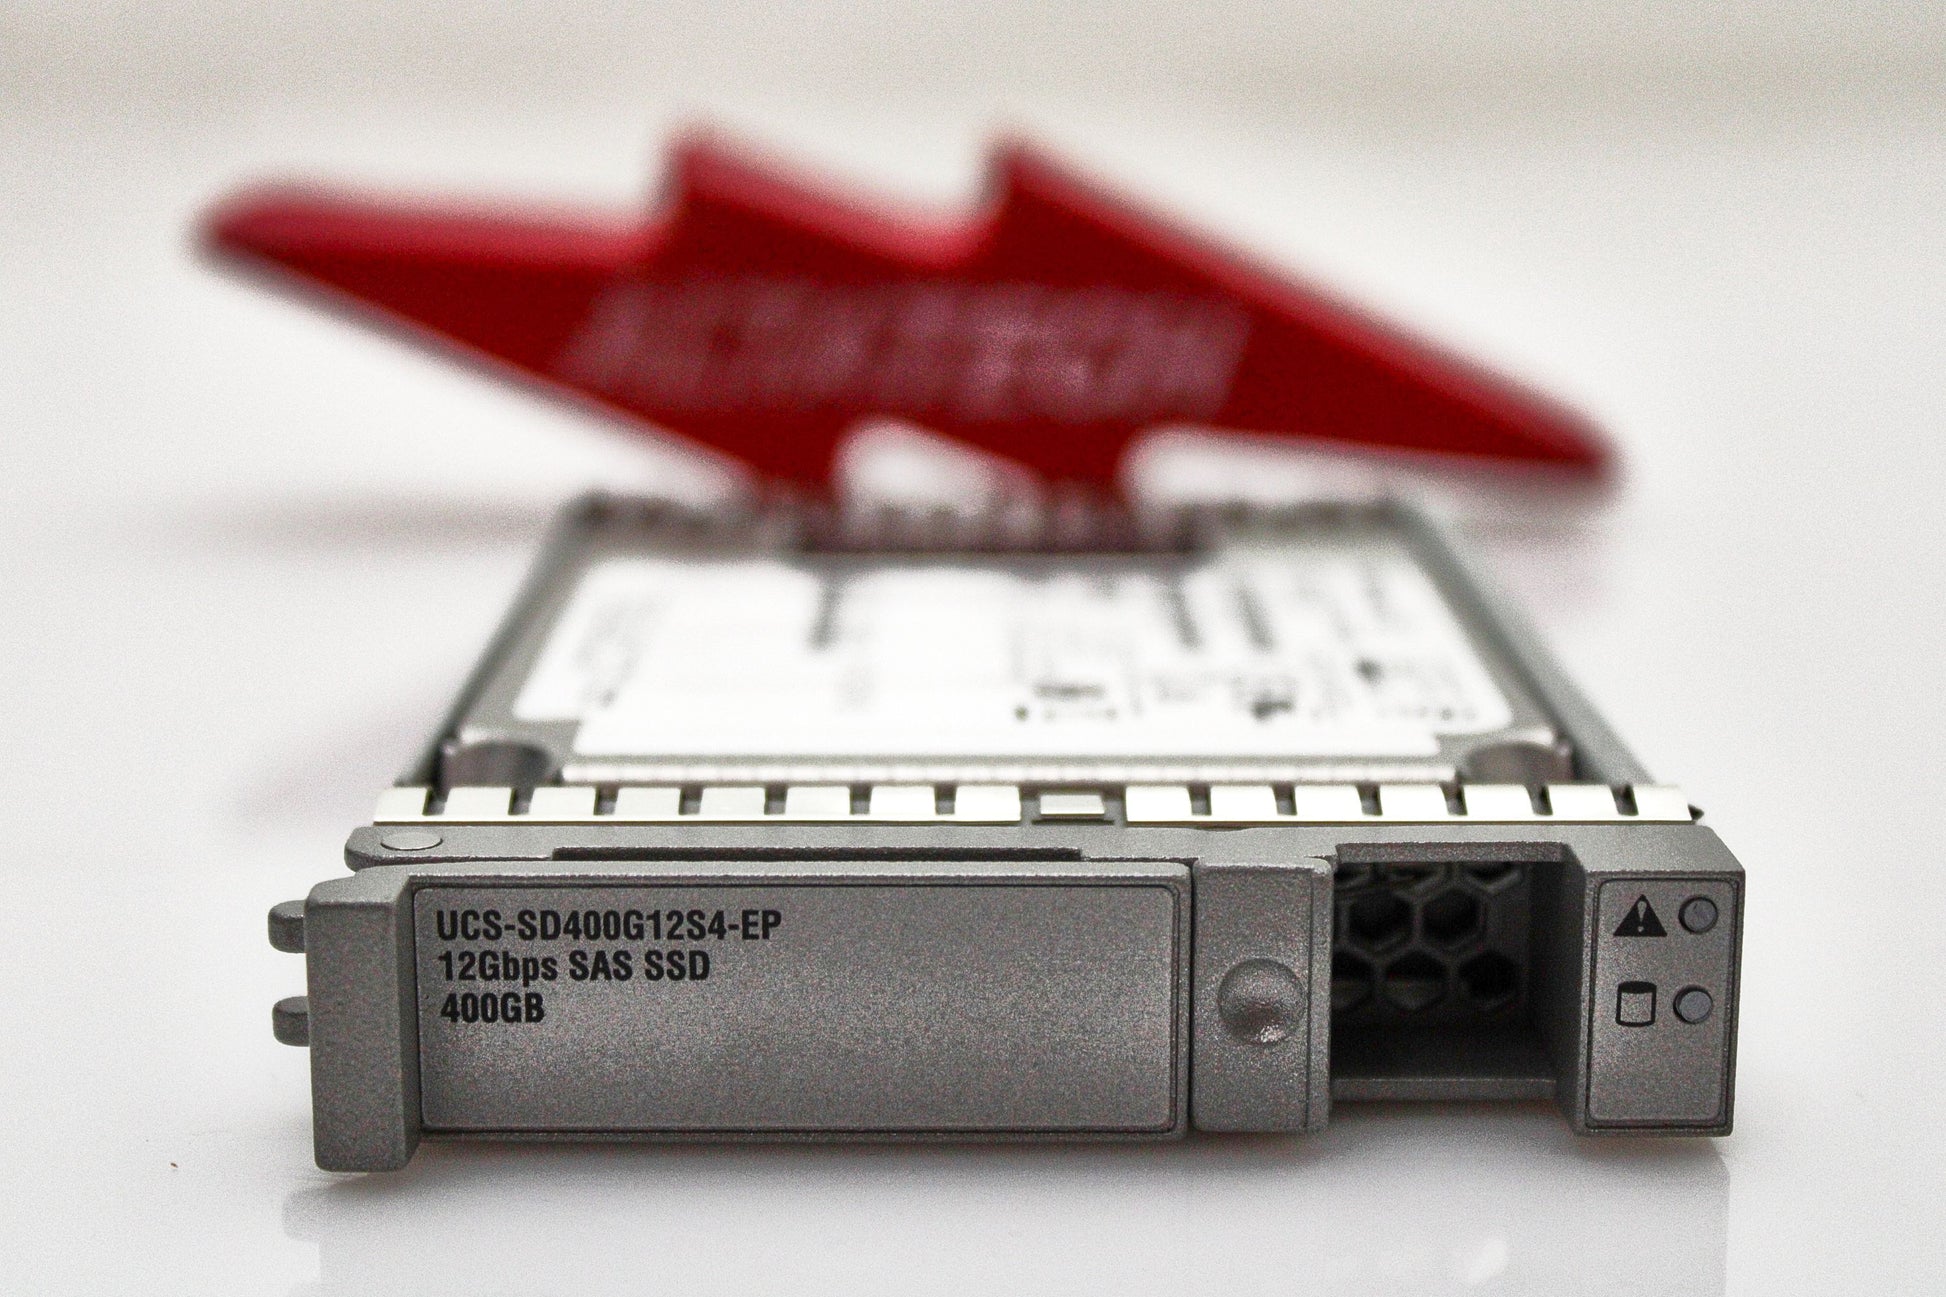 Toshiba UCS-SD400G12S4-EP 400GB SAS 2.5" Enterprise Solid State Drive, Used